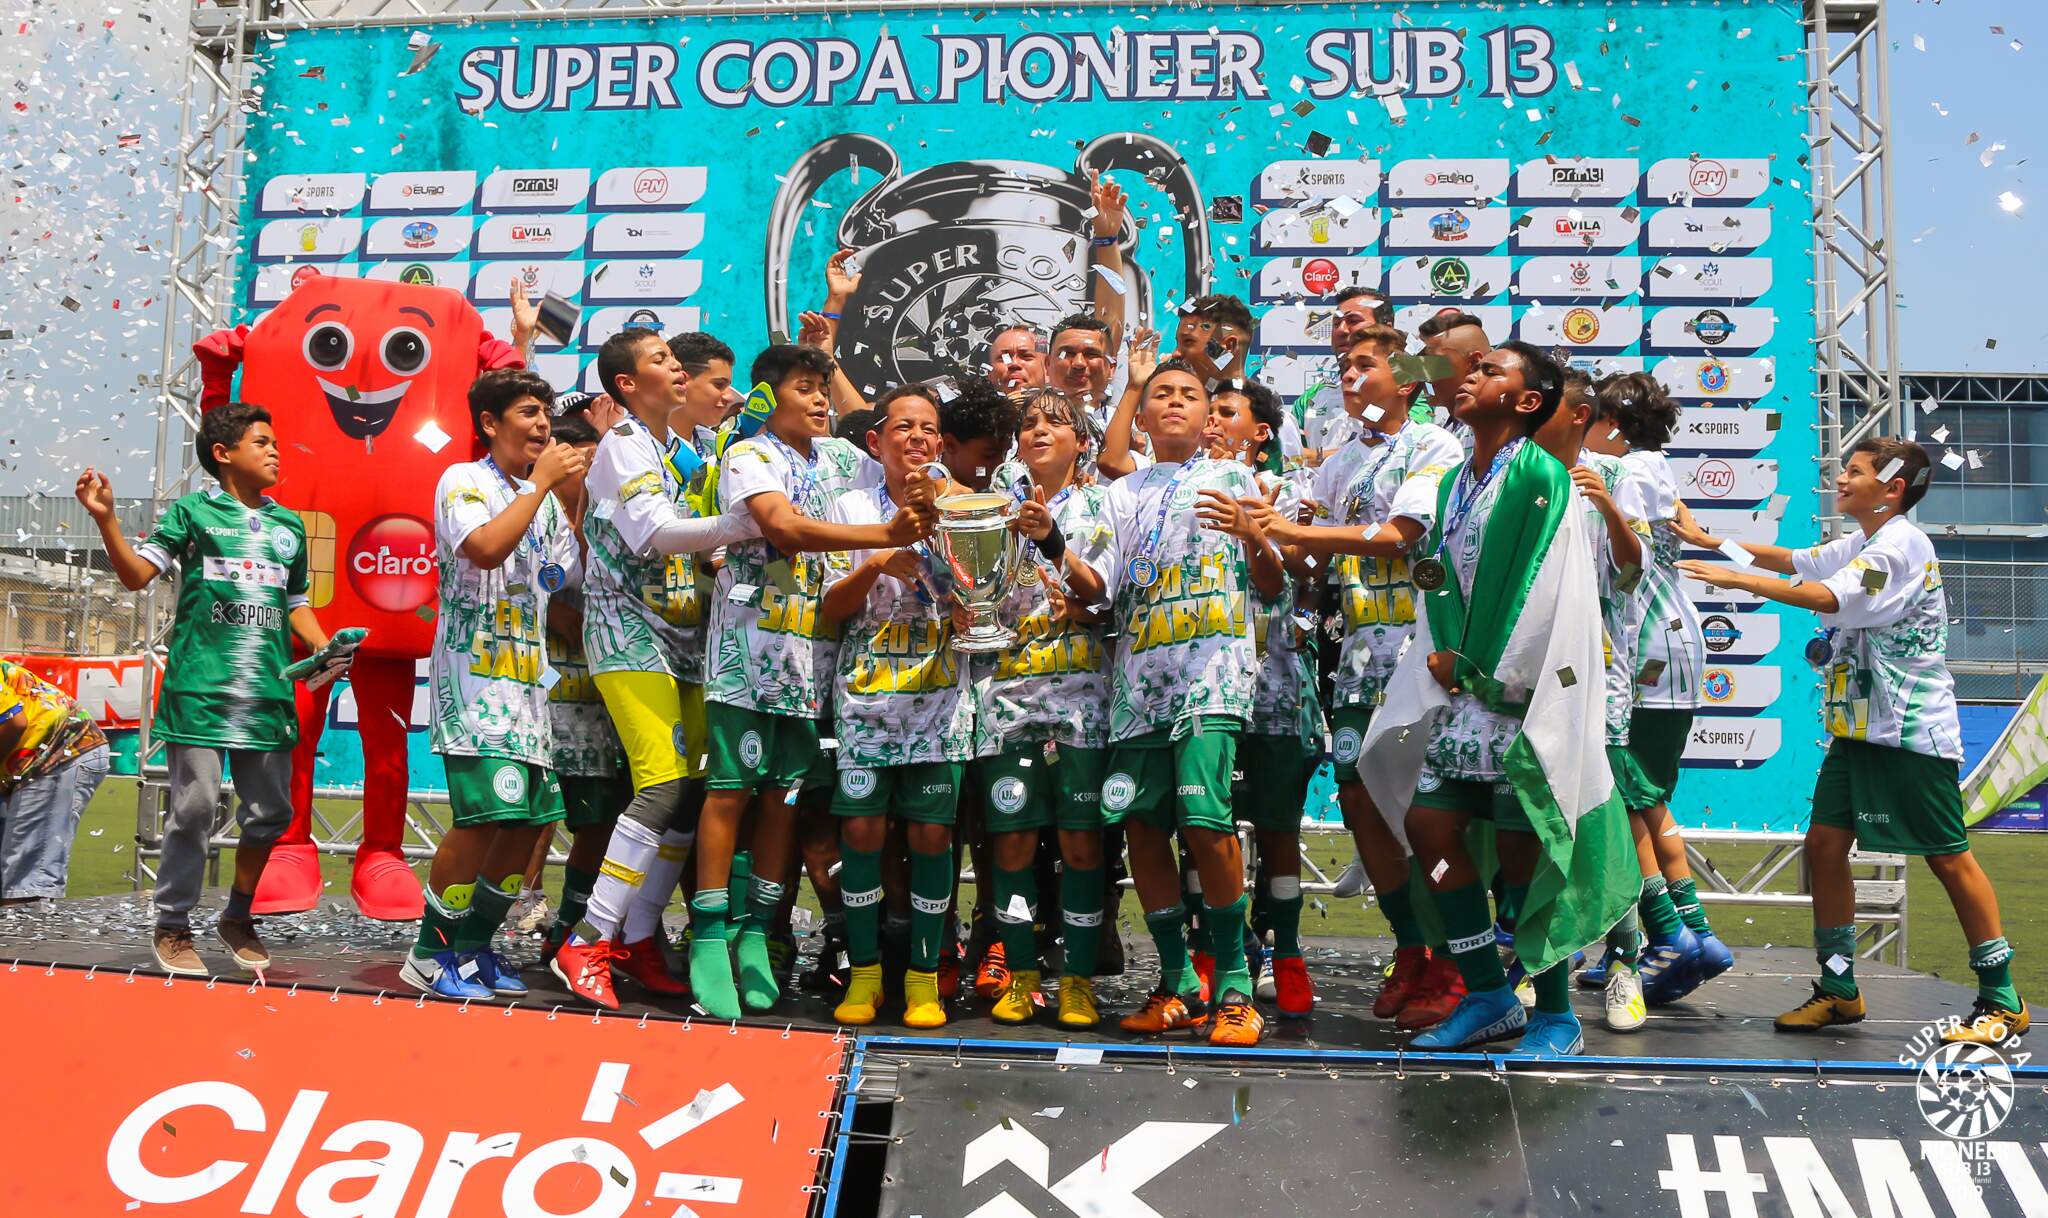 King Sports #MUDEOJOGO, Super Copa Pioneer